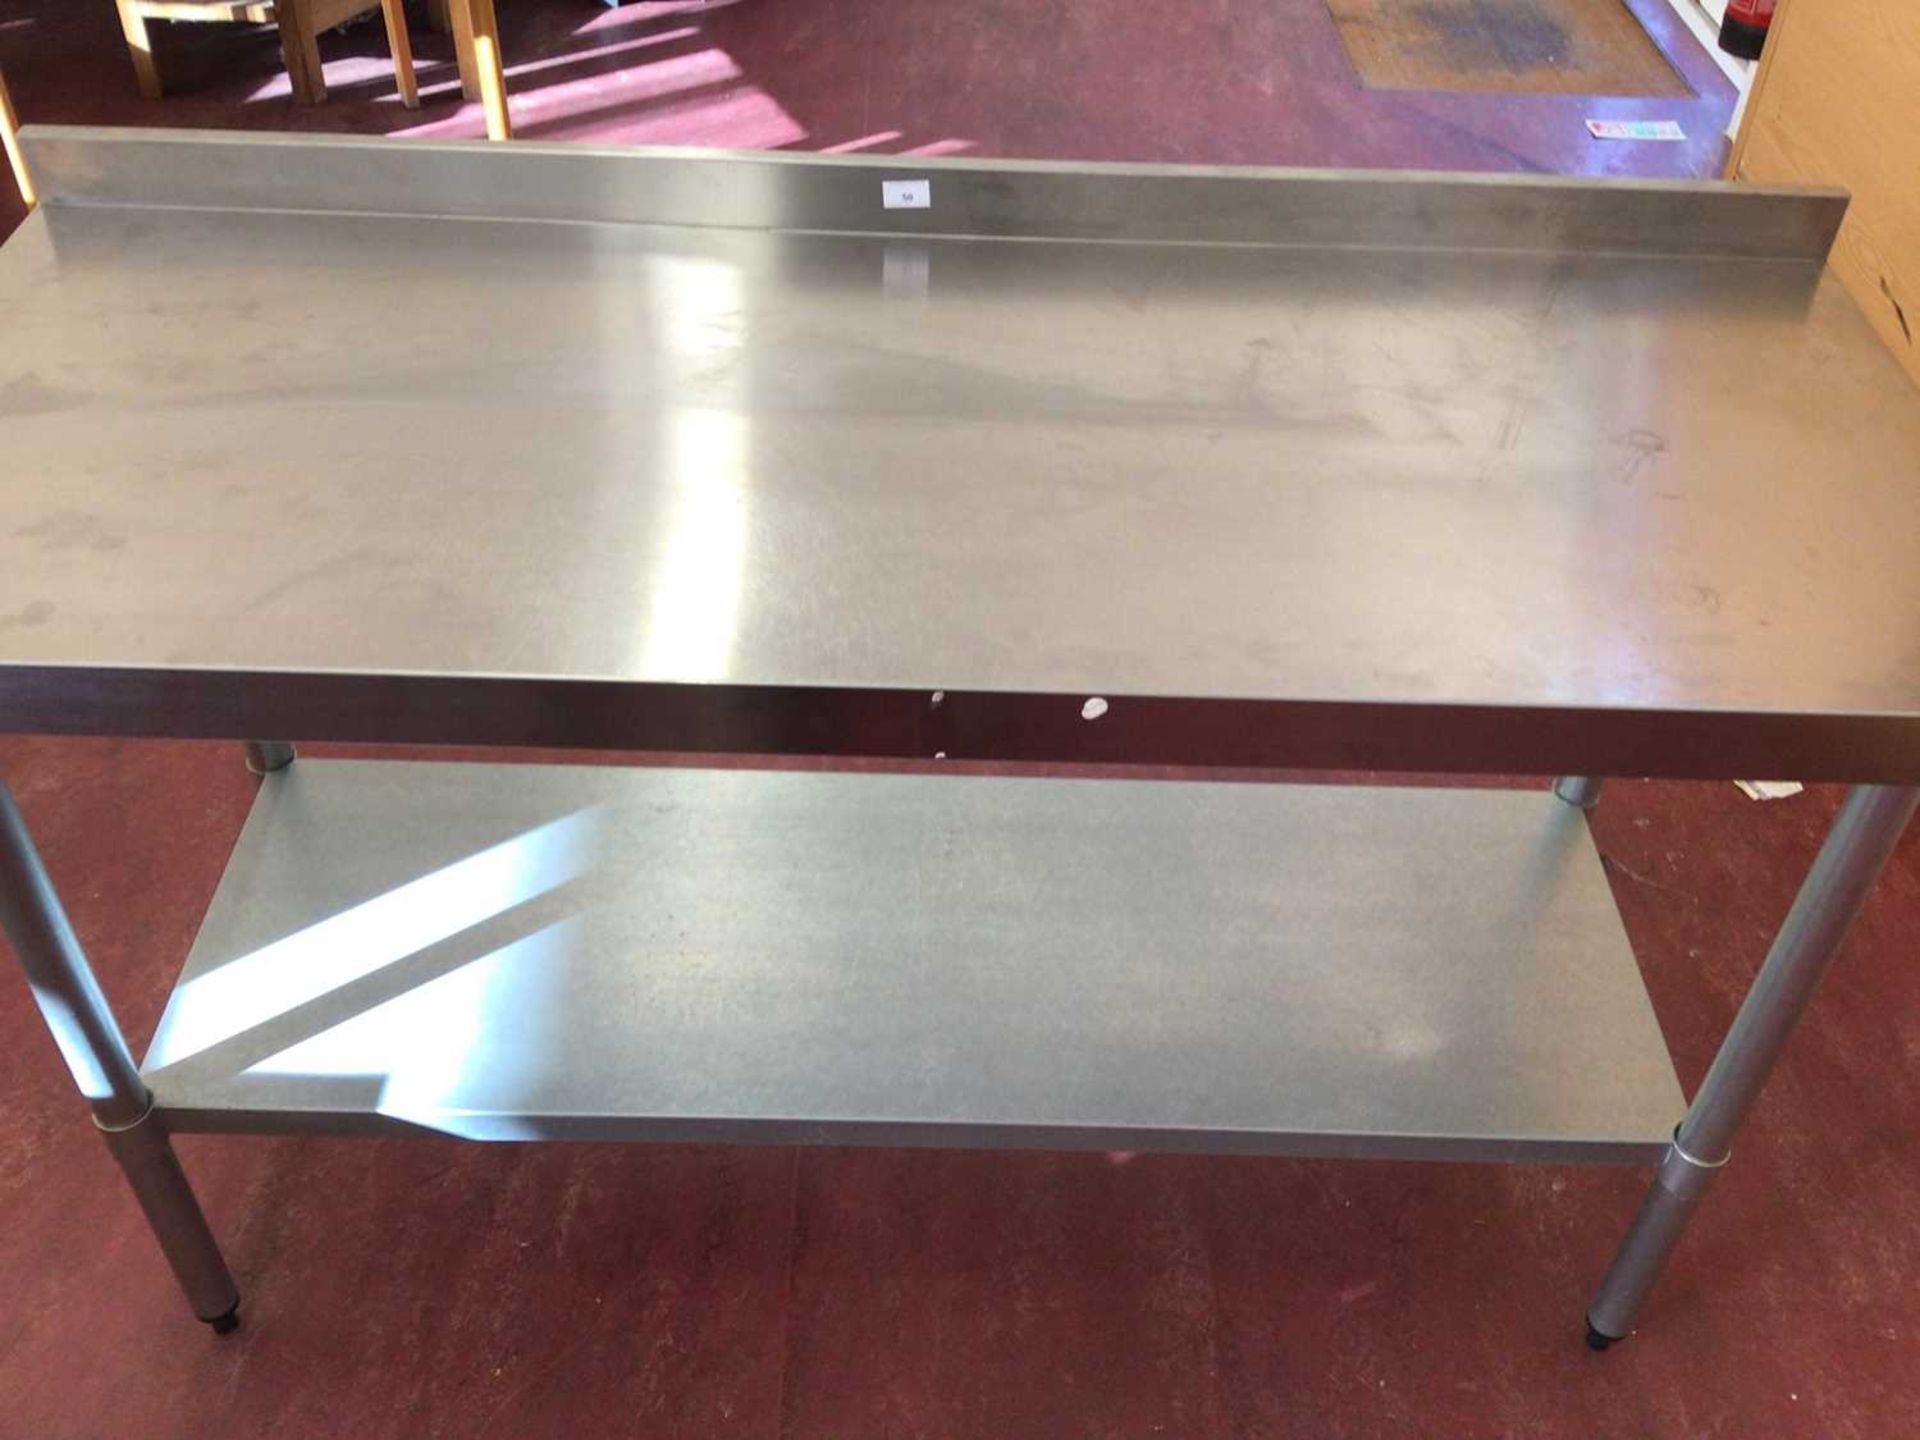 A wall standing stainless steel preparation bench, with shelf under, 1500 mm - Bild 2 aus 2